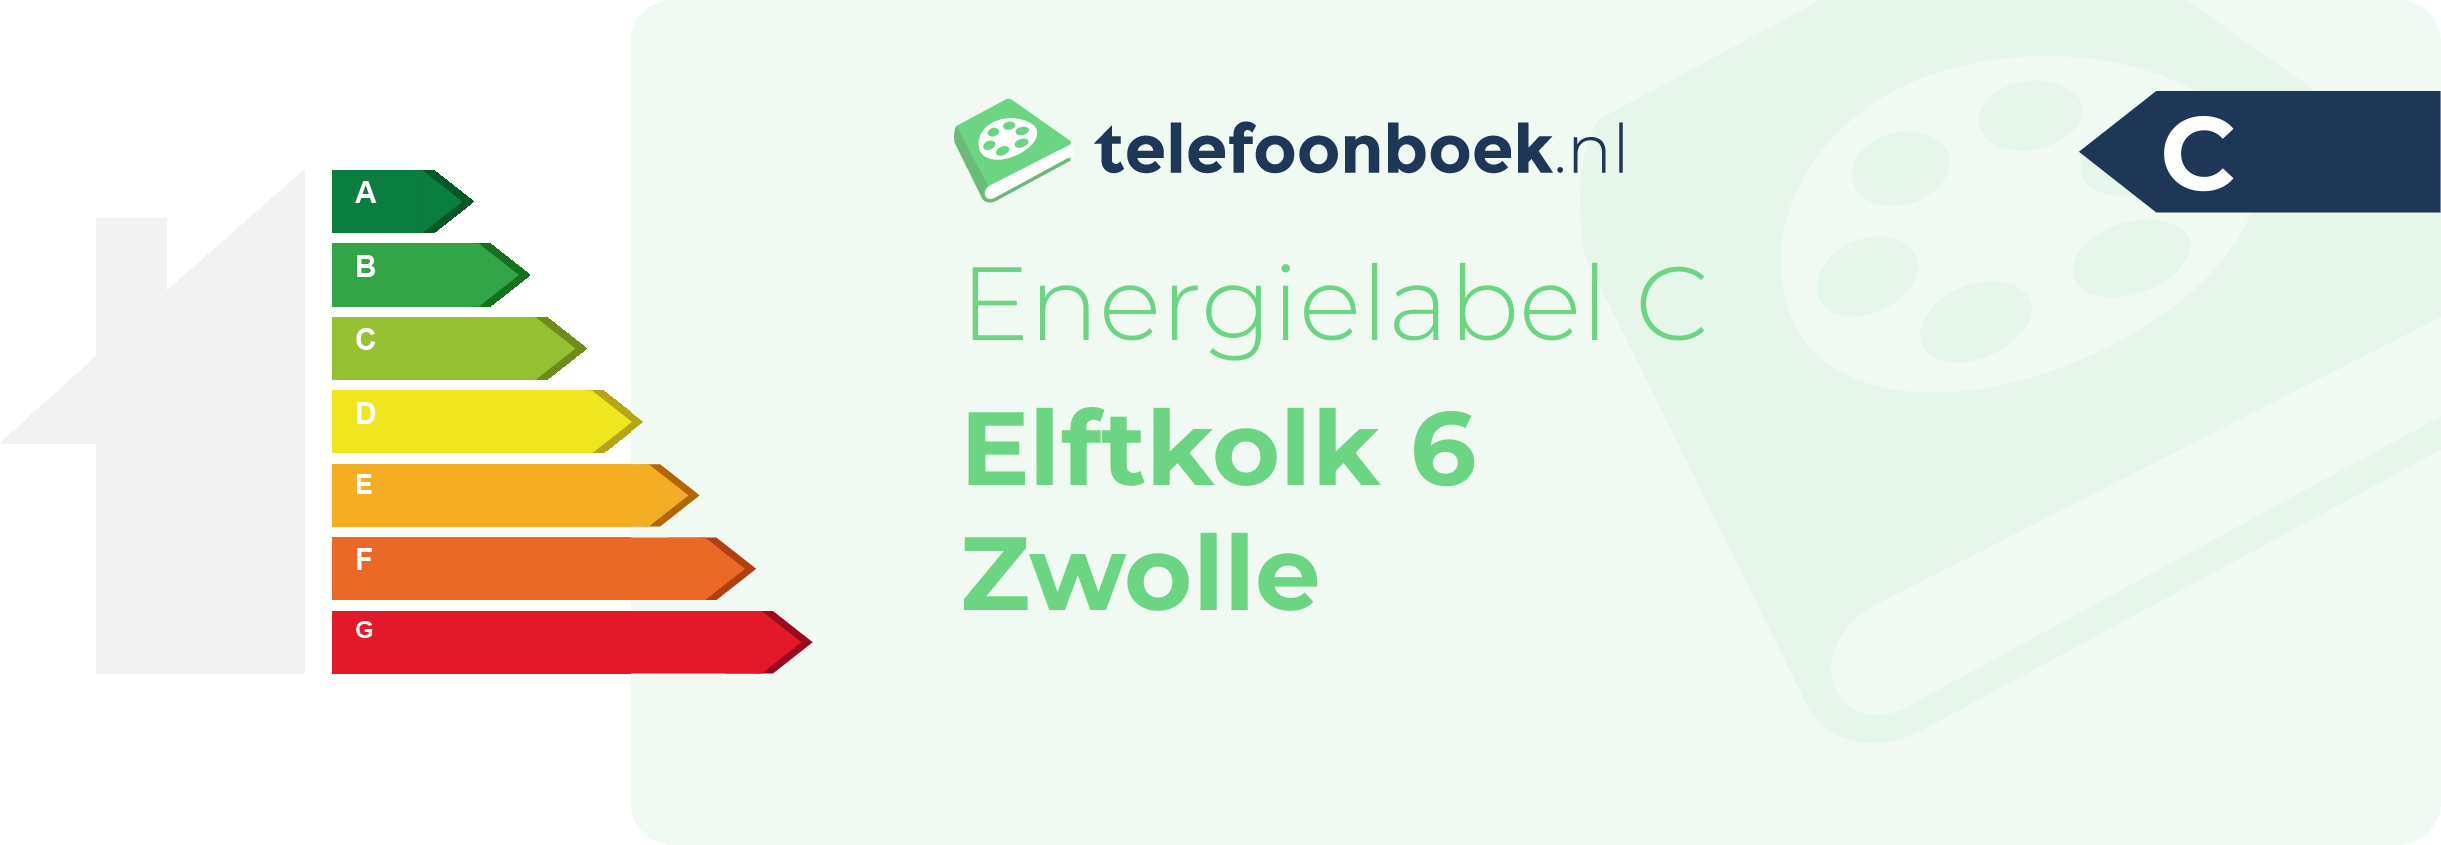 Energielabel Elftkolk 6 Zwolle